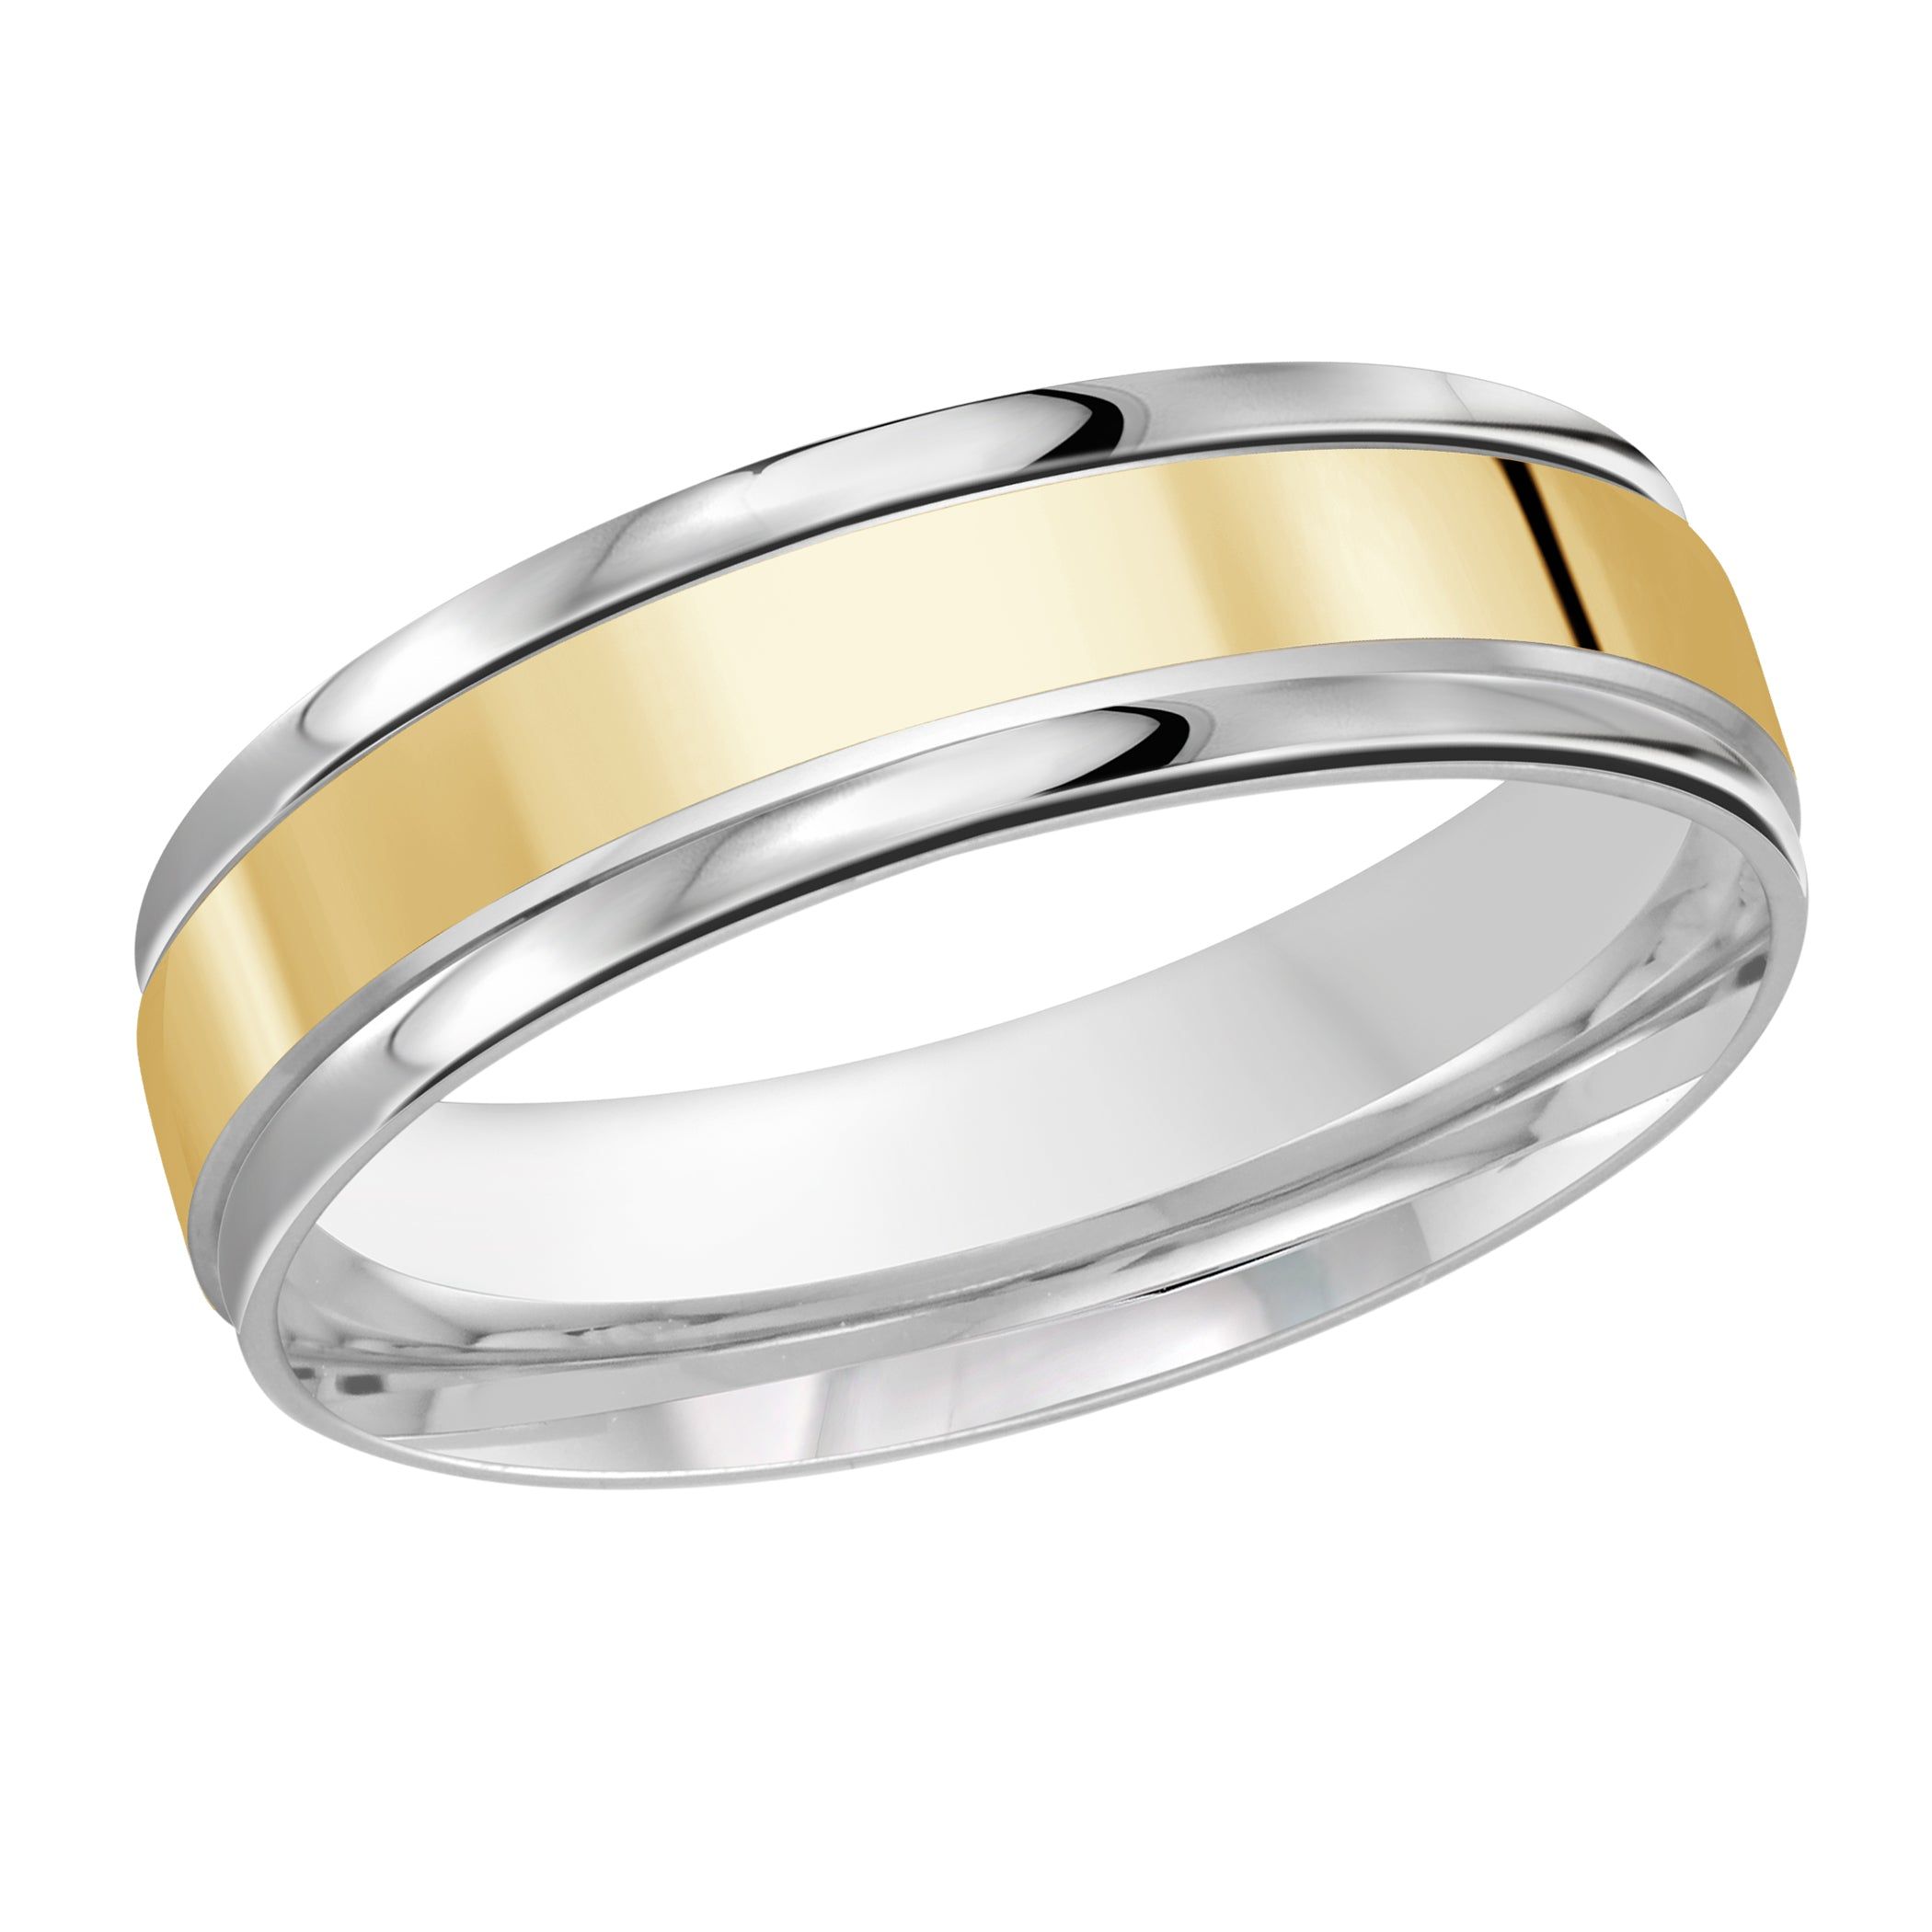 Men's 6mm Two-tone High Polish Wedding Ring